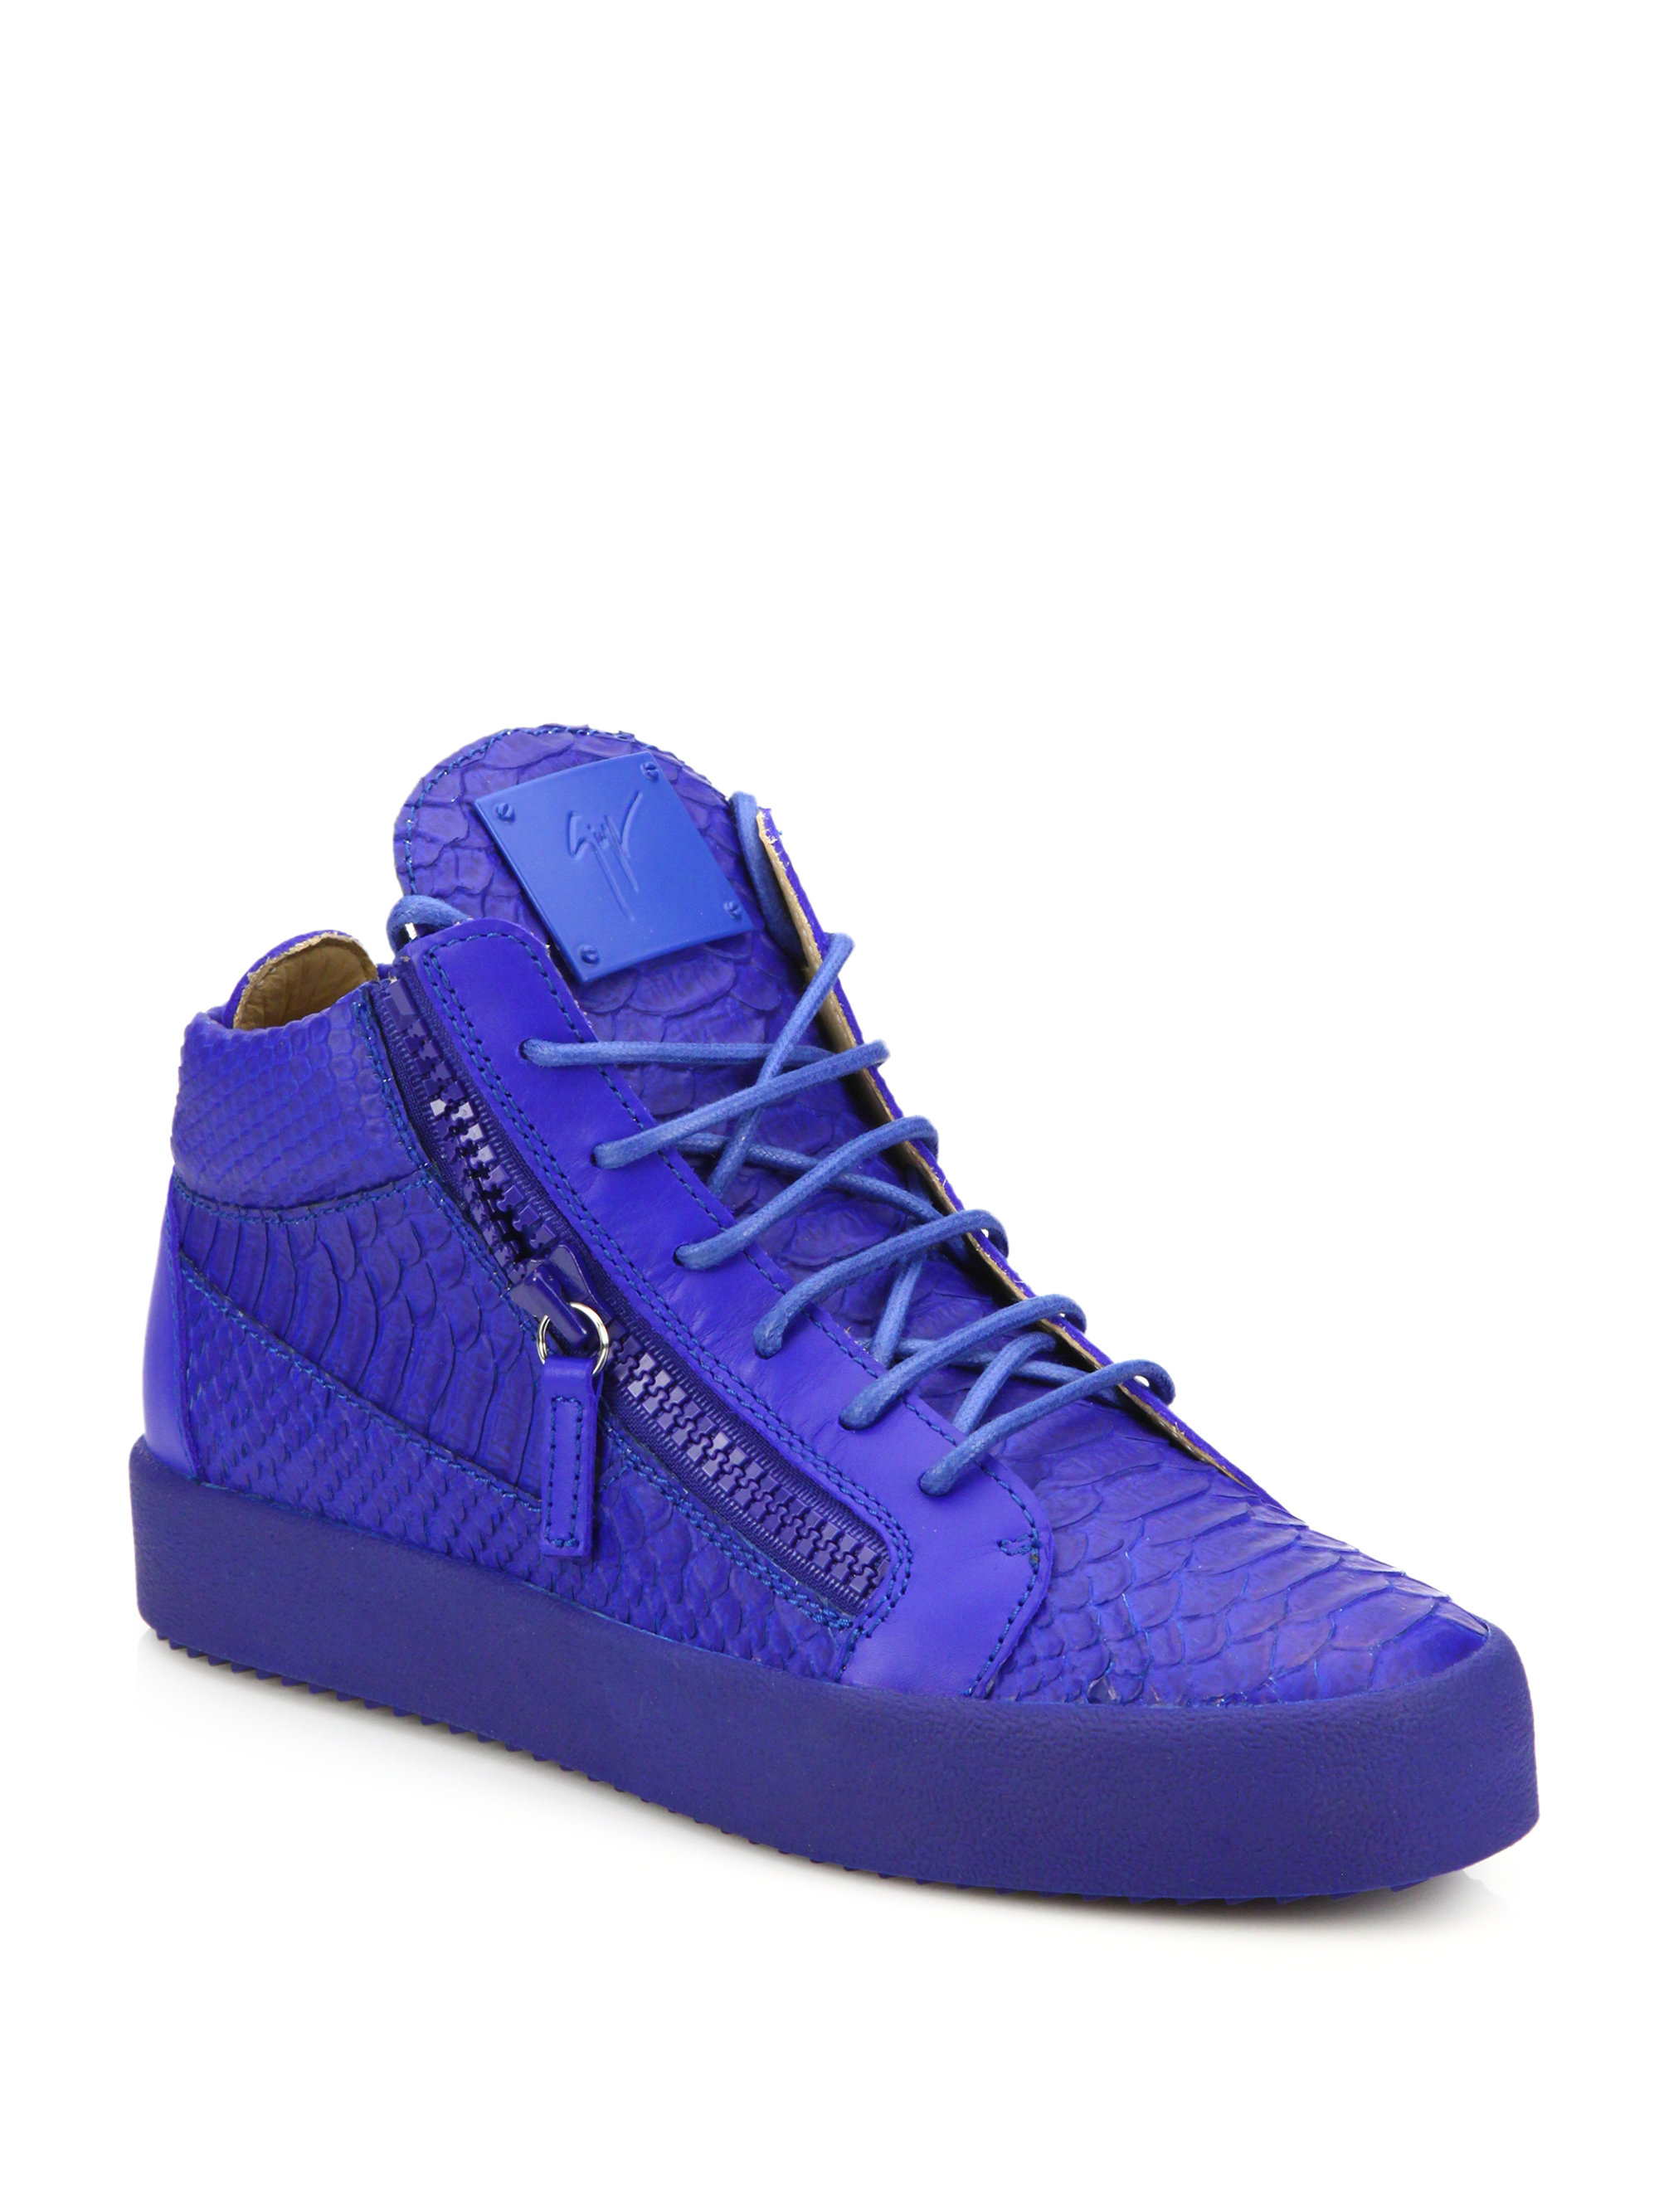 Lyst - Giuseppe Zanotti Embossed Leather Double-zip Sneakers in Blue